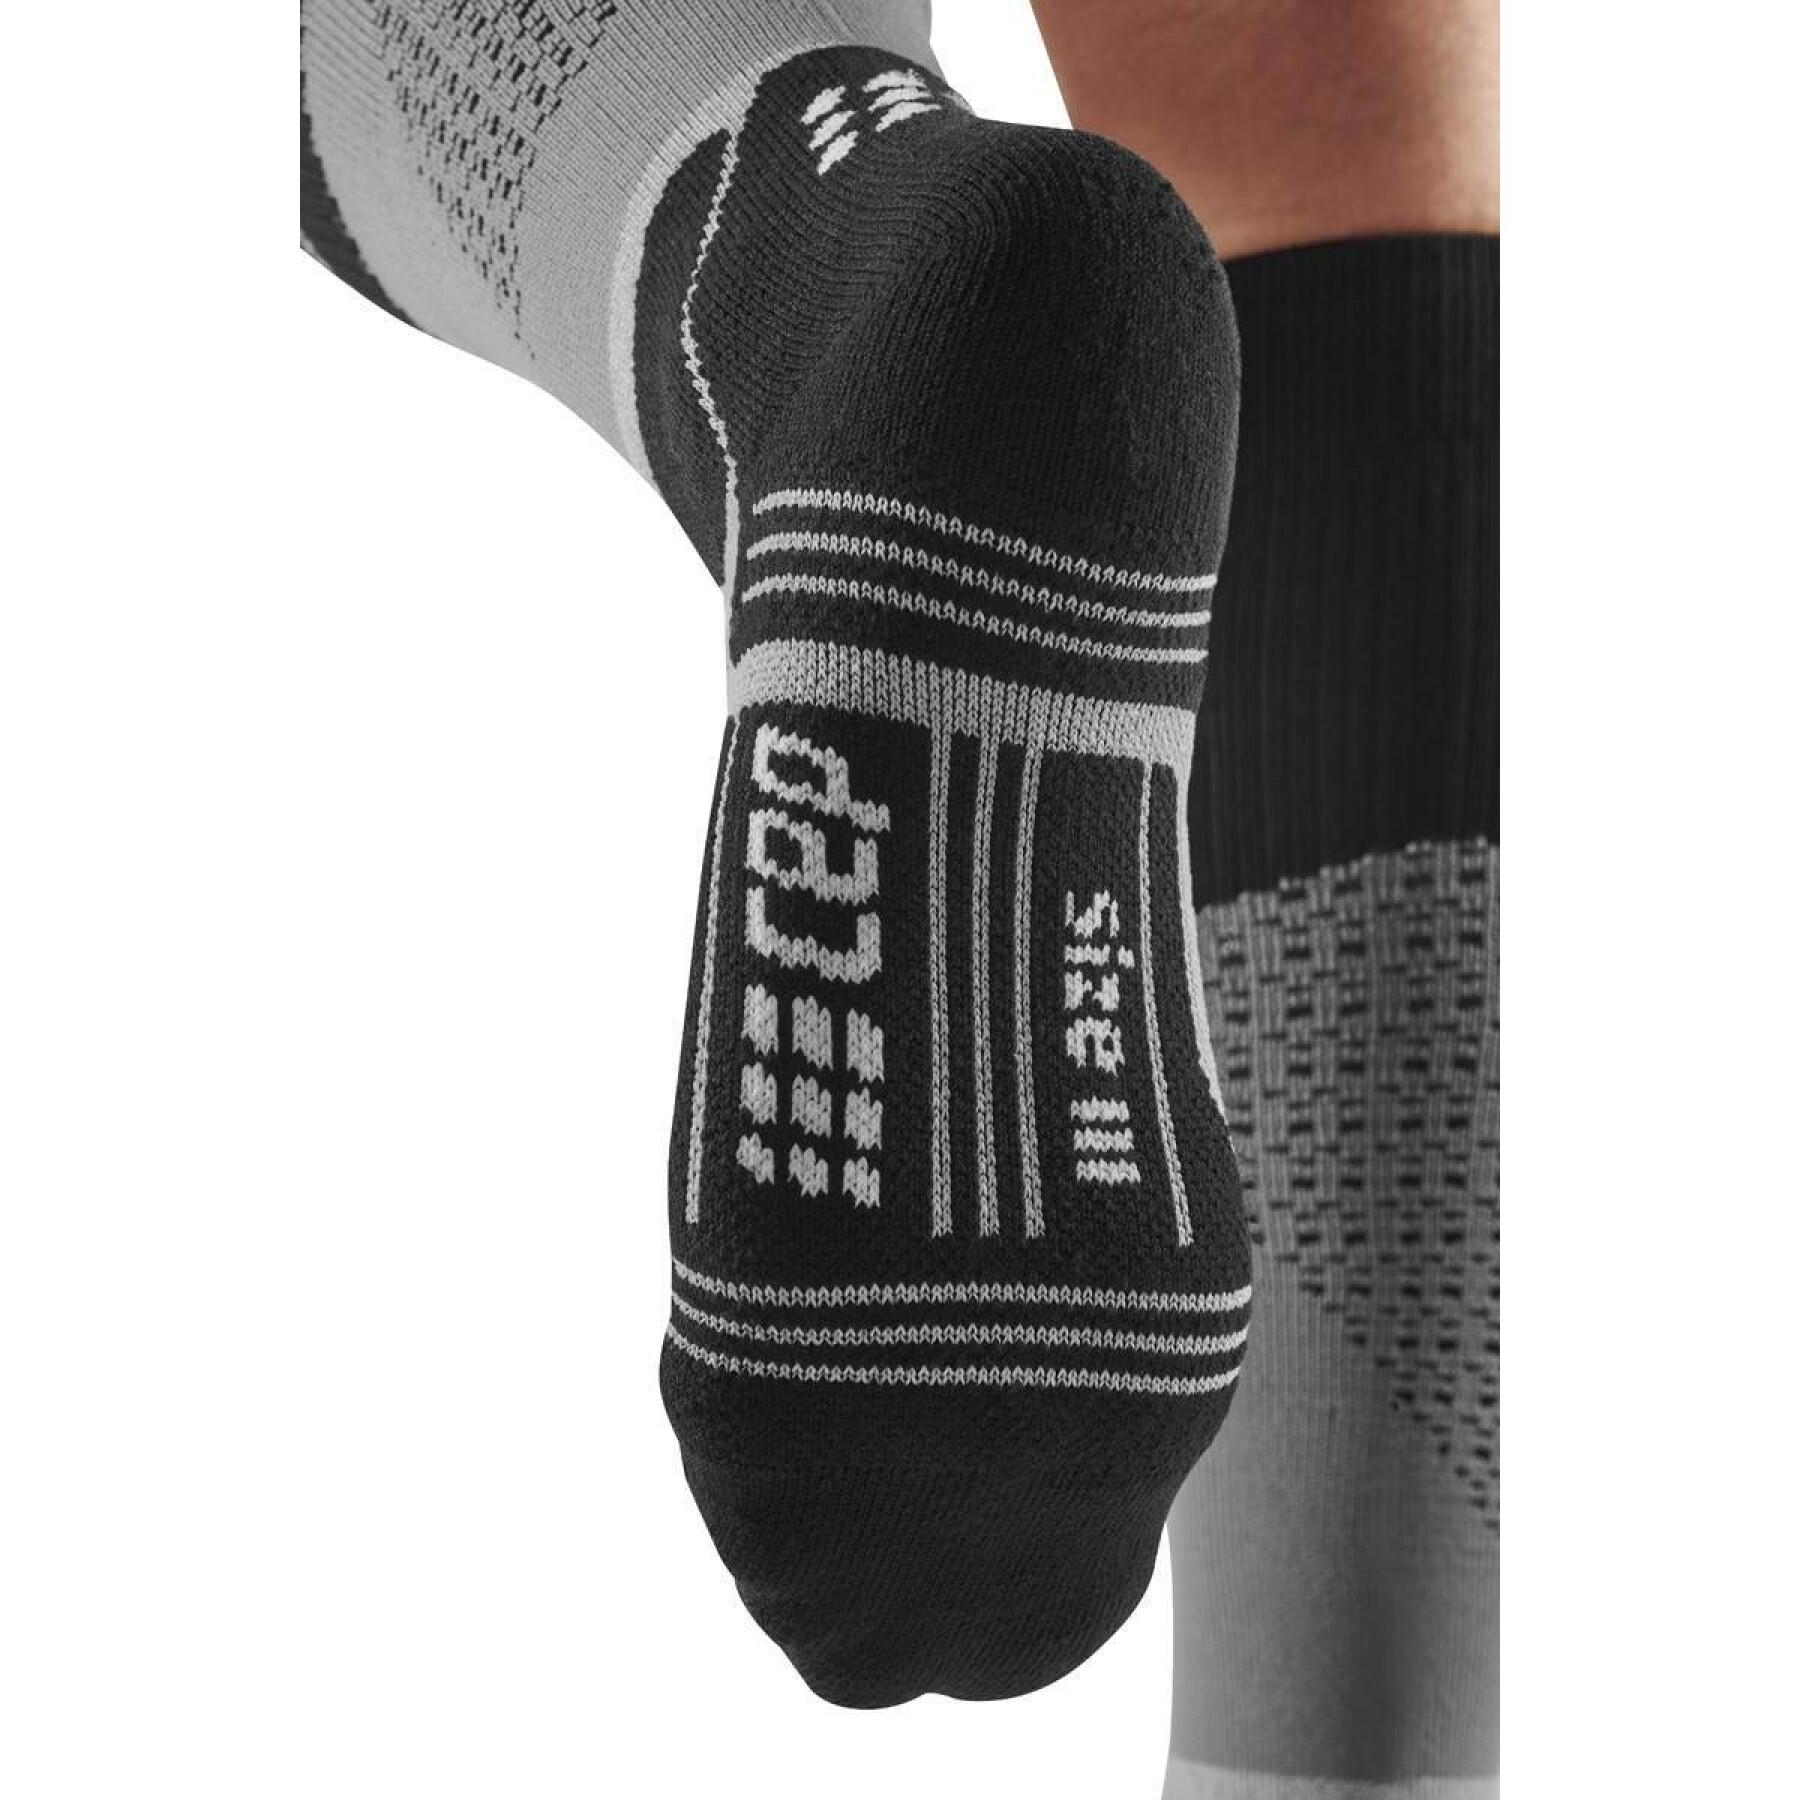 Women's socks CEP Compression Max cushion Tall